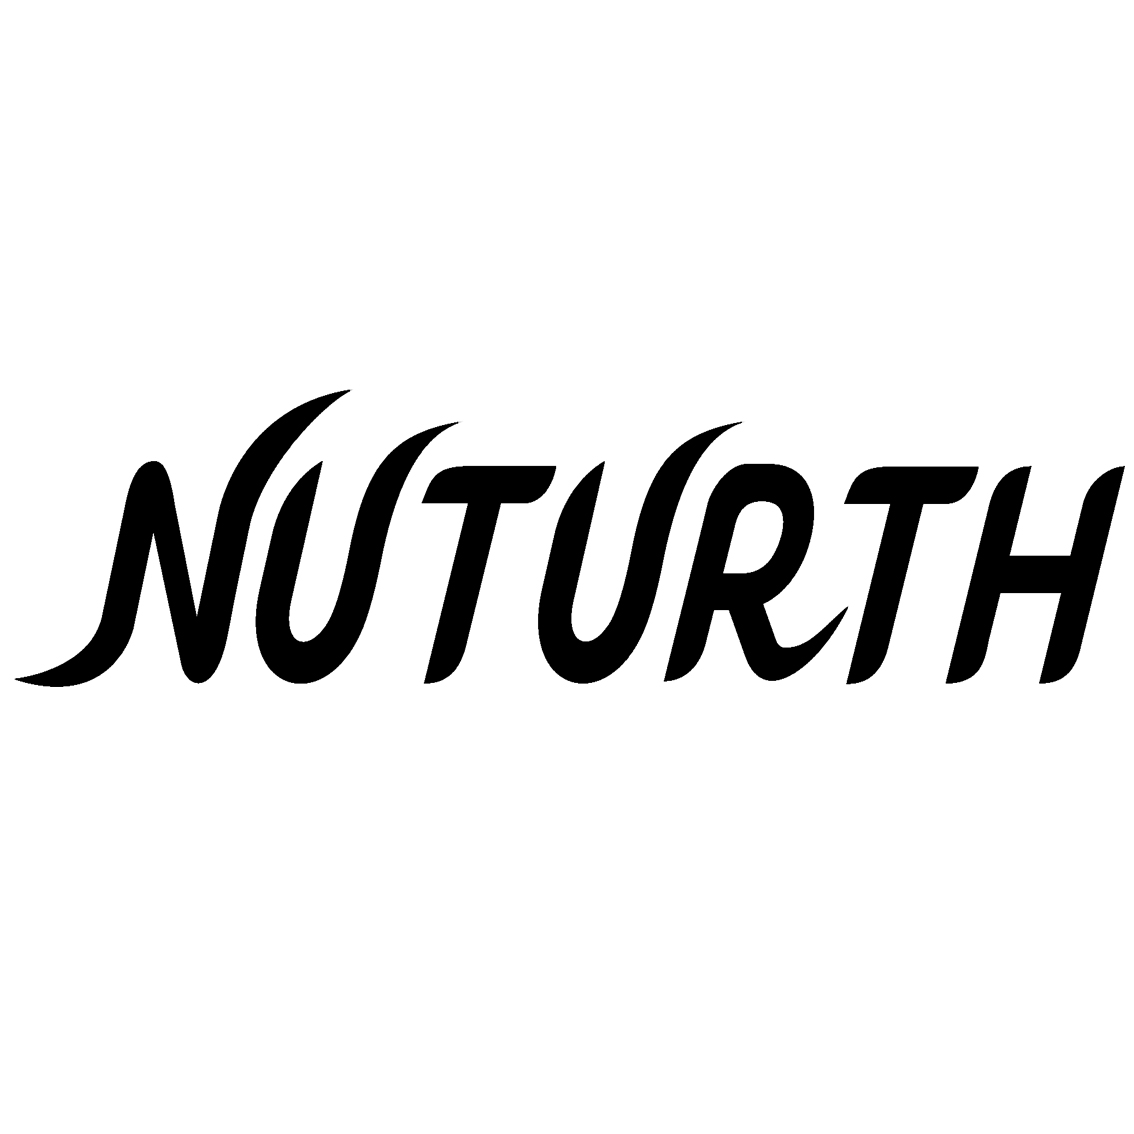 NUTURTH